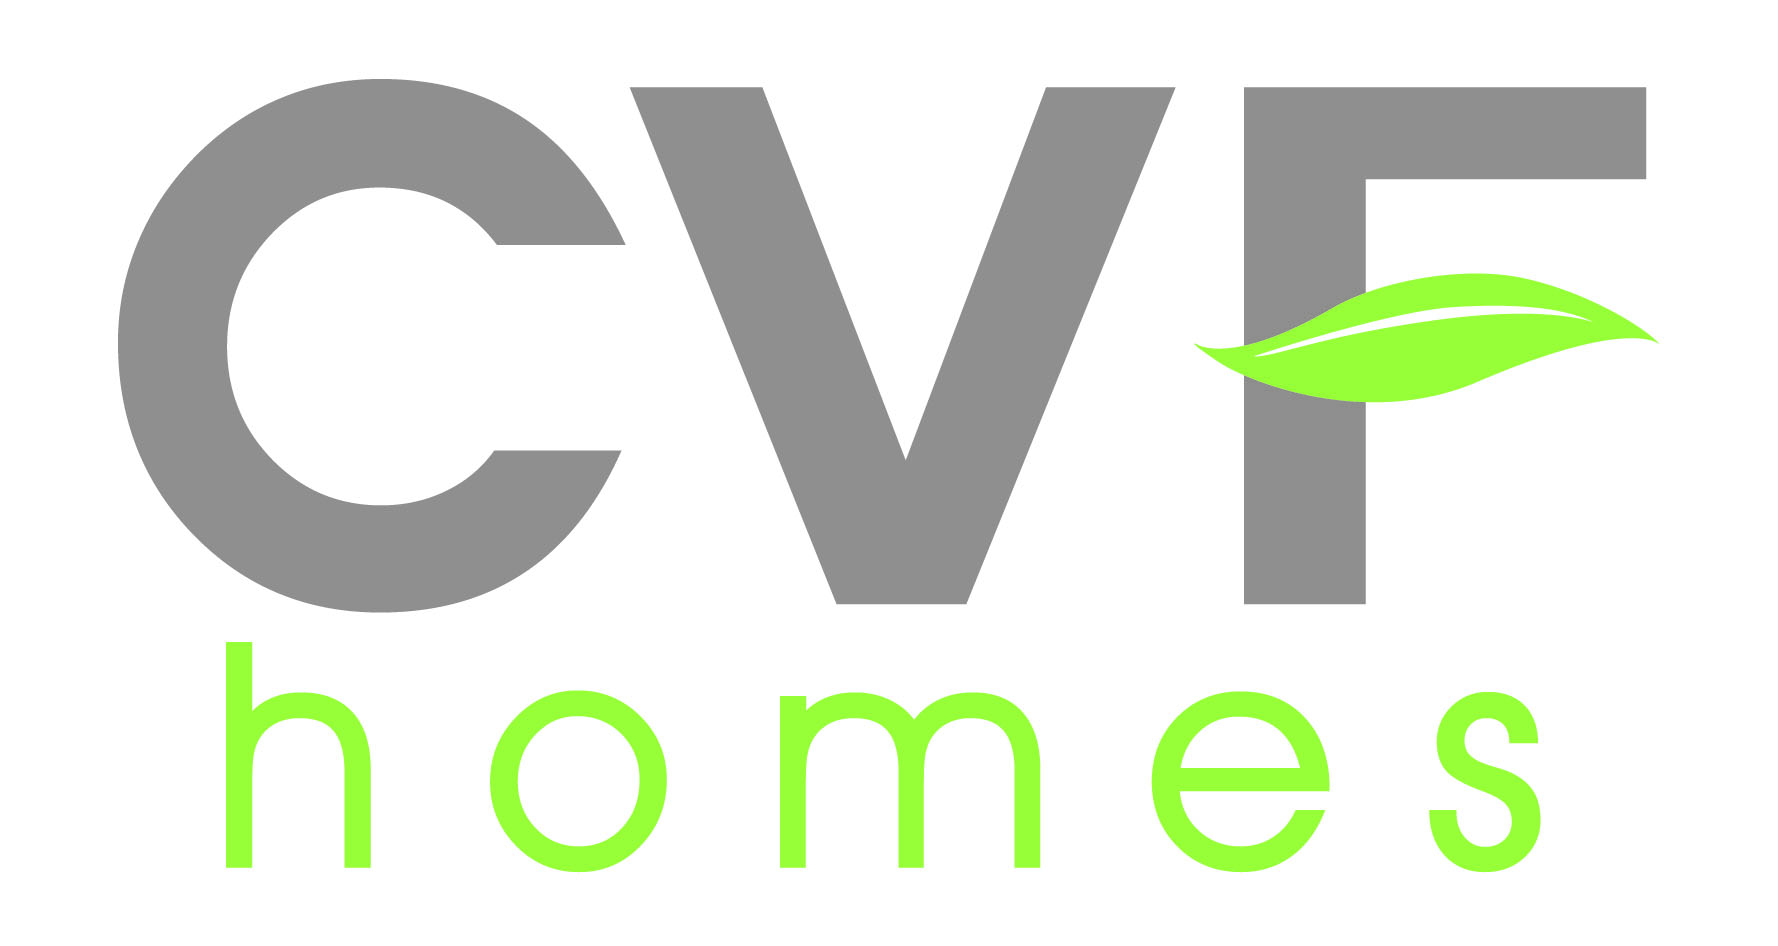 CVF LLC company logo